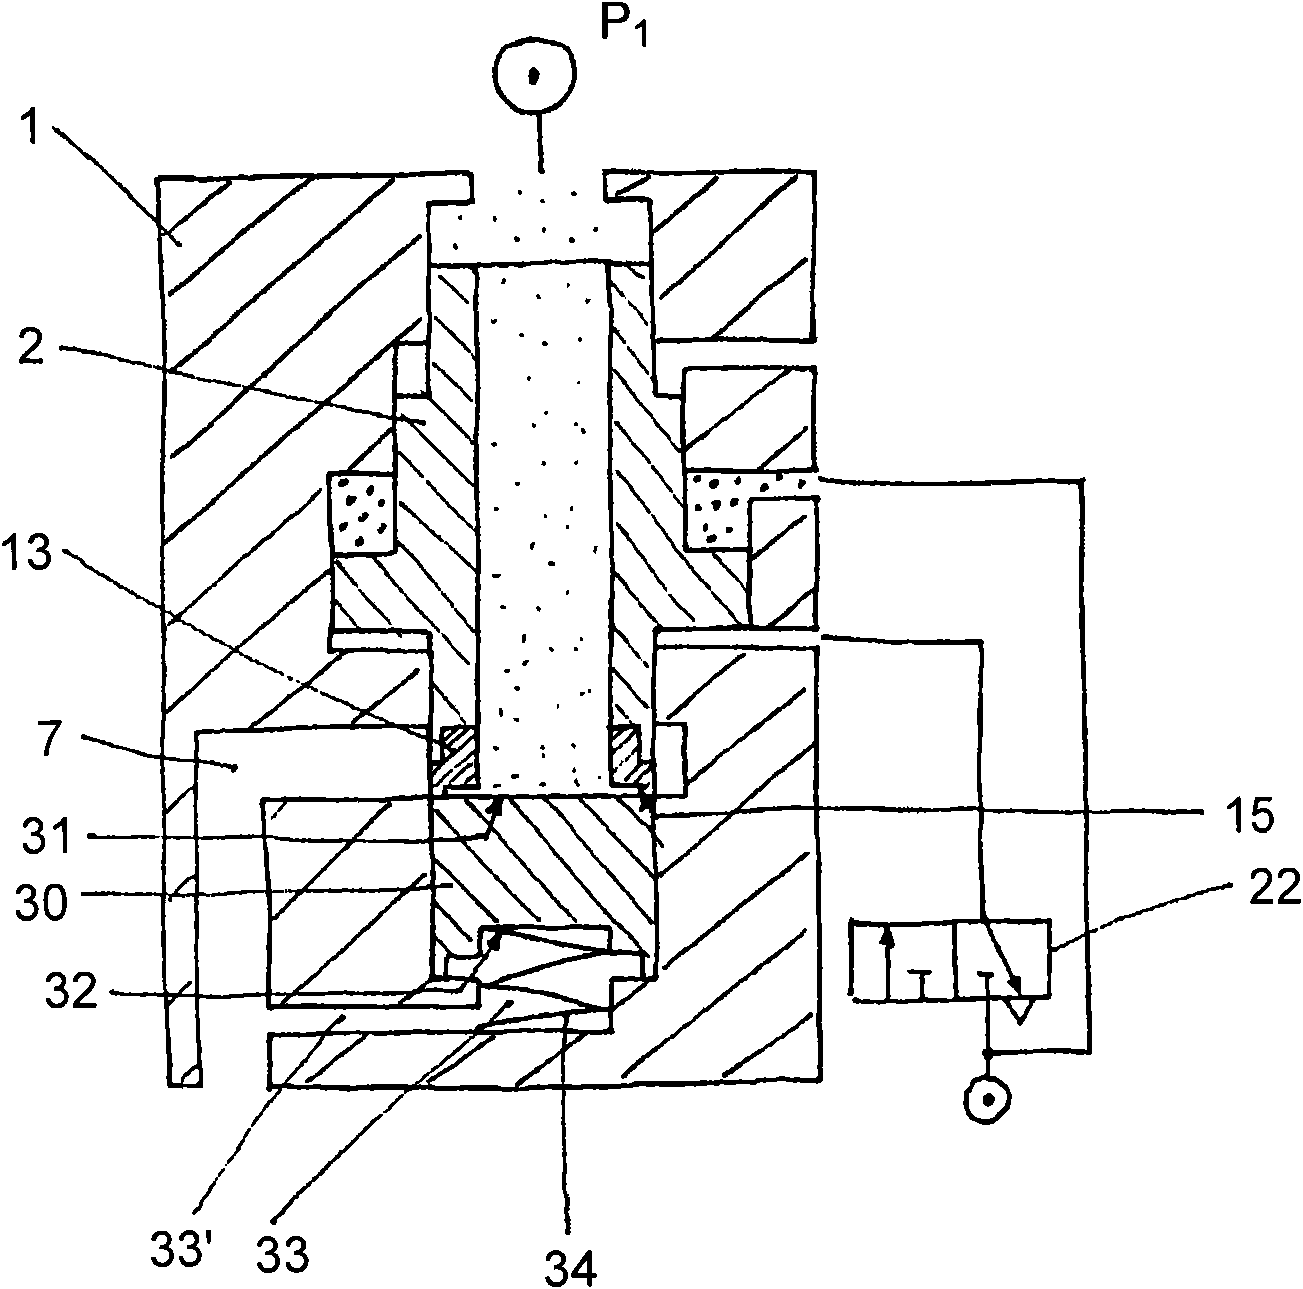 Air-controlled valve